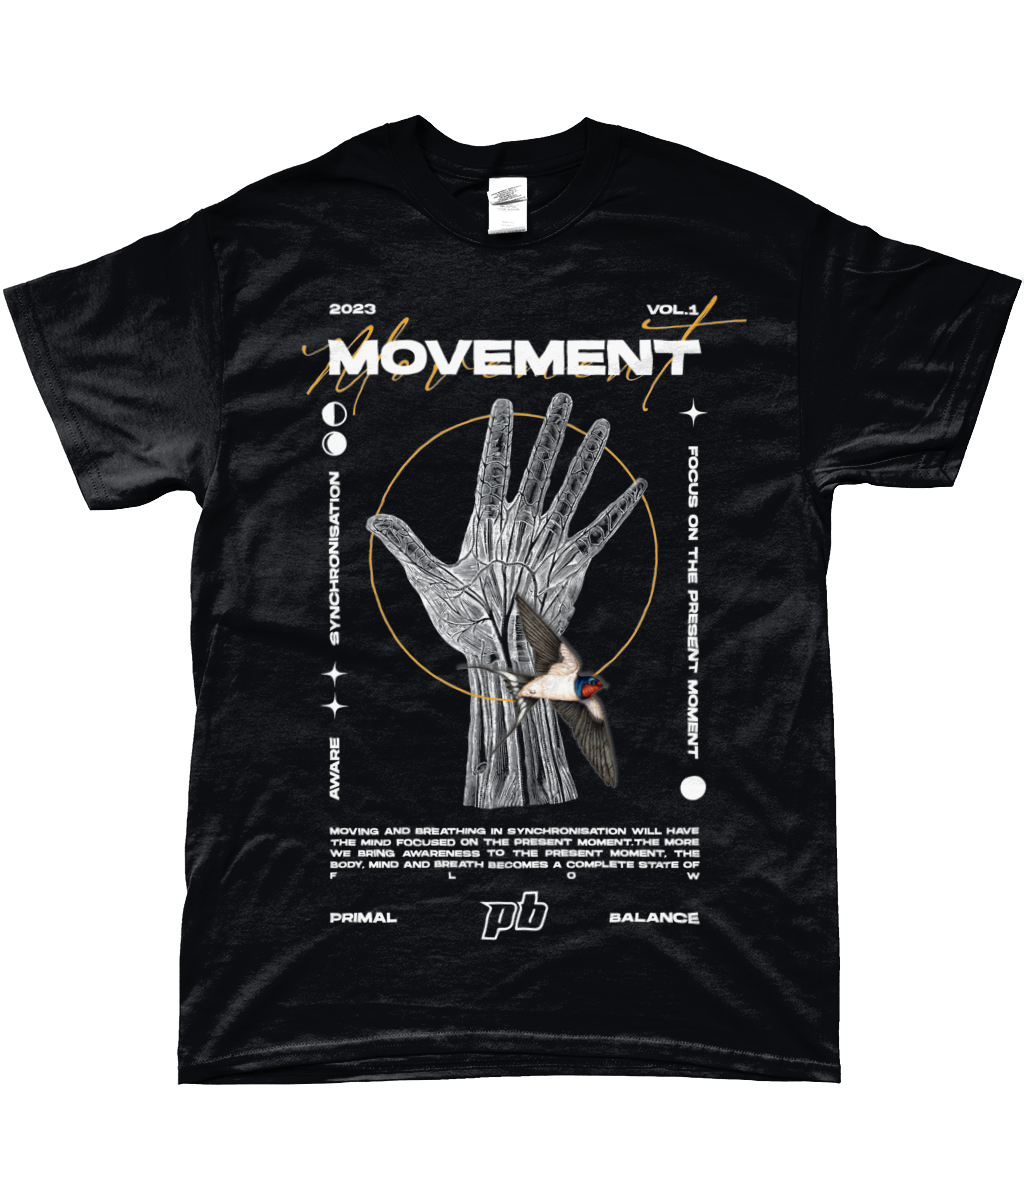 Movement T-Shirt (Black)